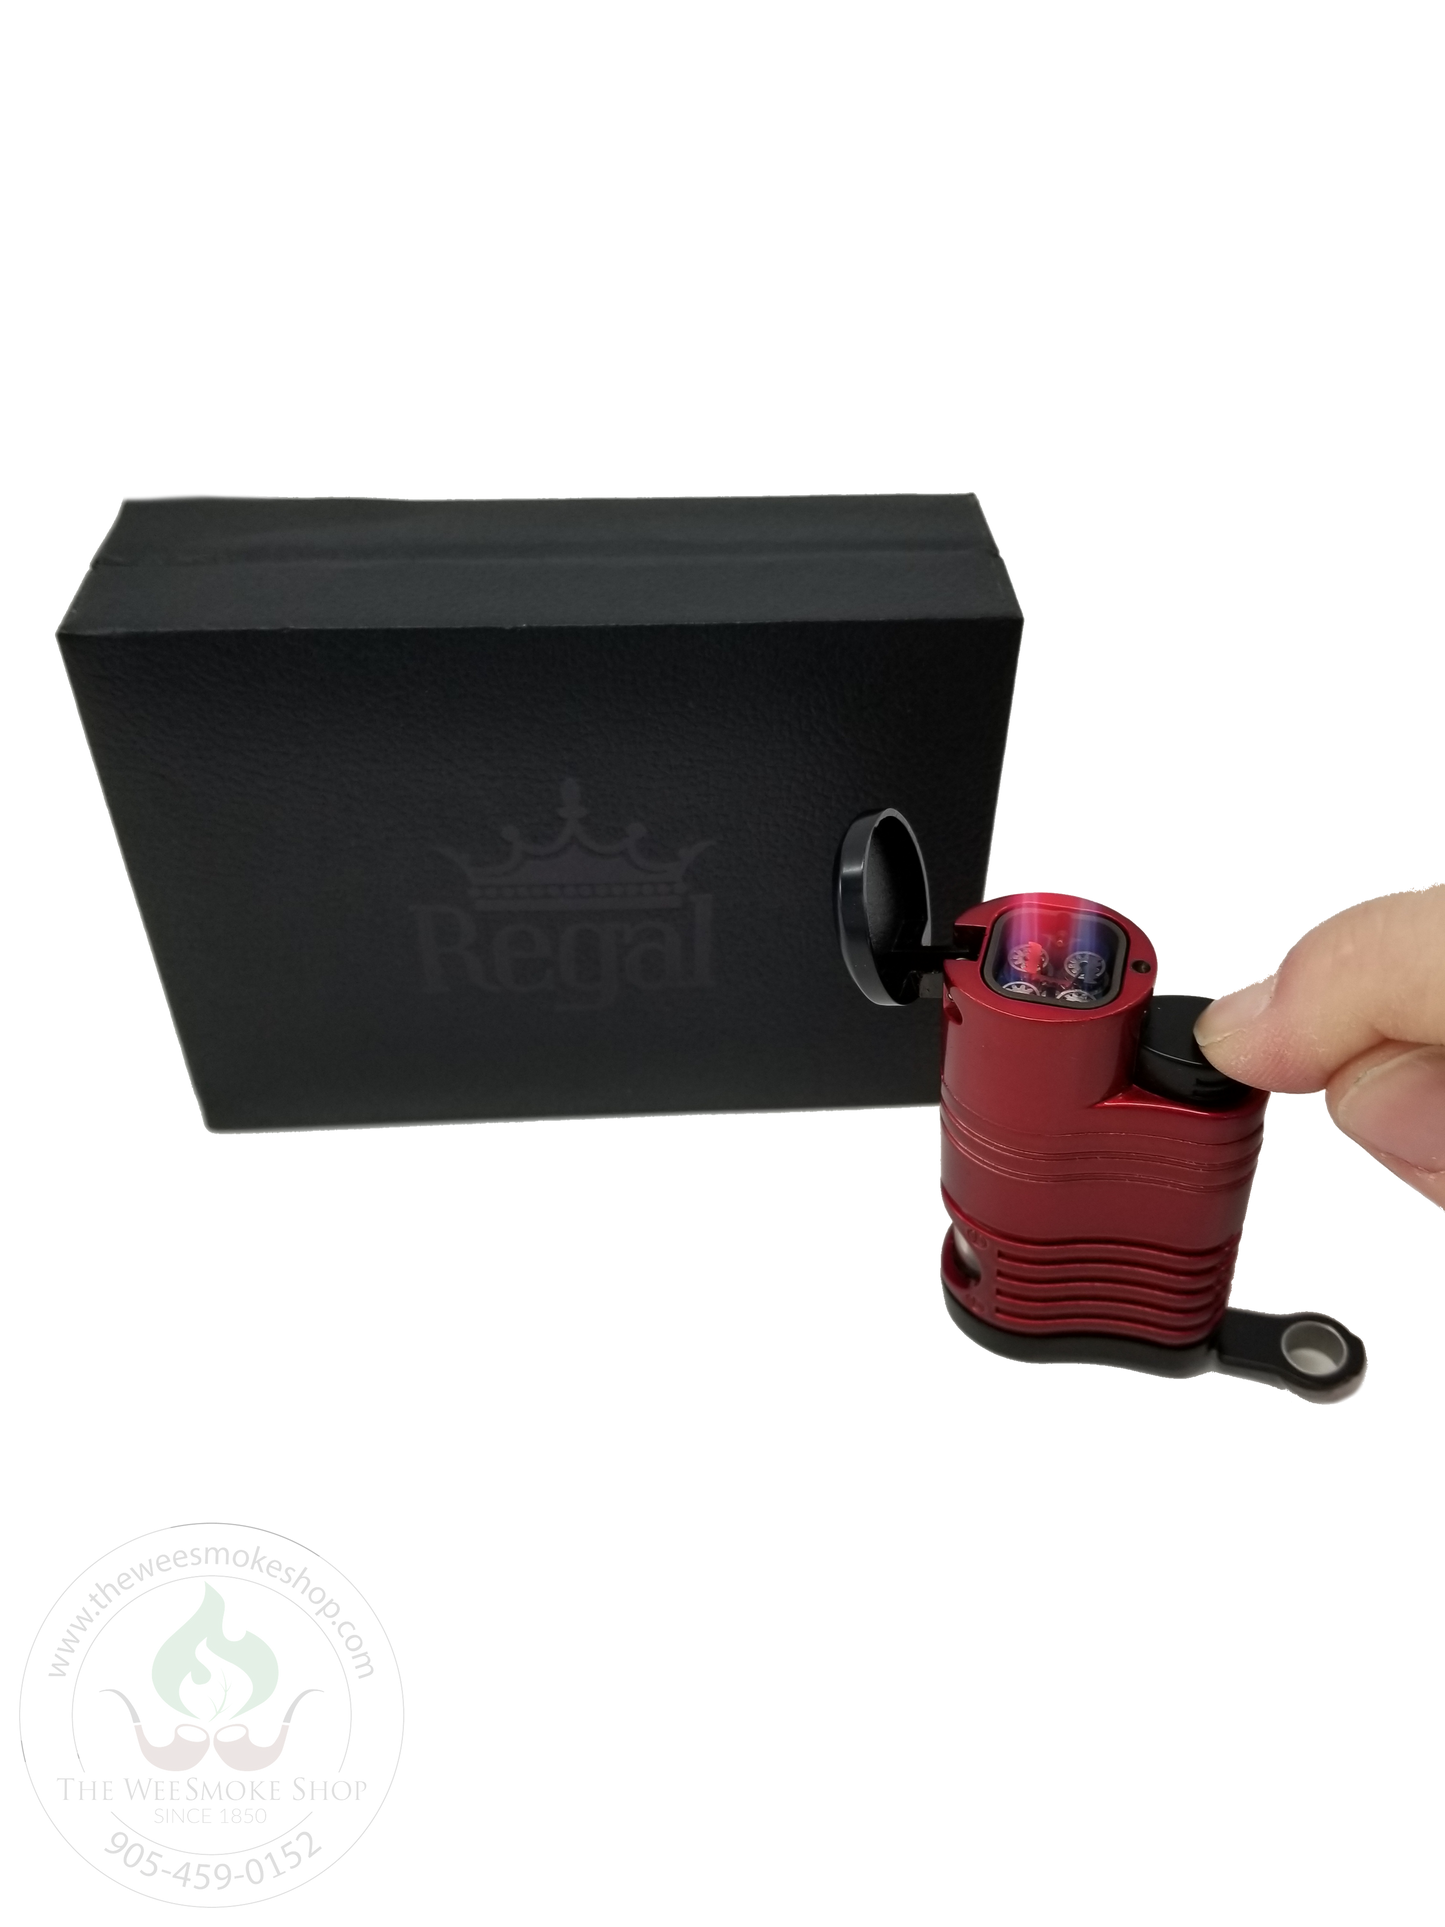 Regal Quad Flame Lighter-Torch Lighter-The Wee Smoke Shop